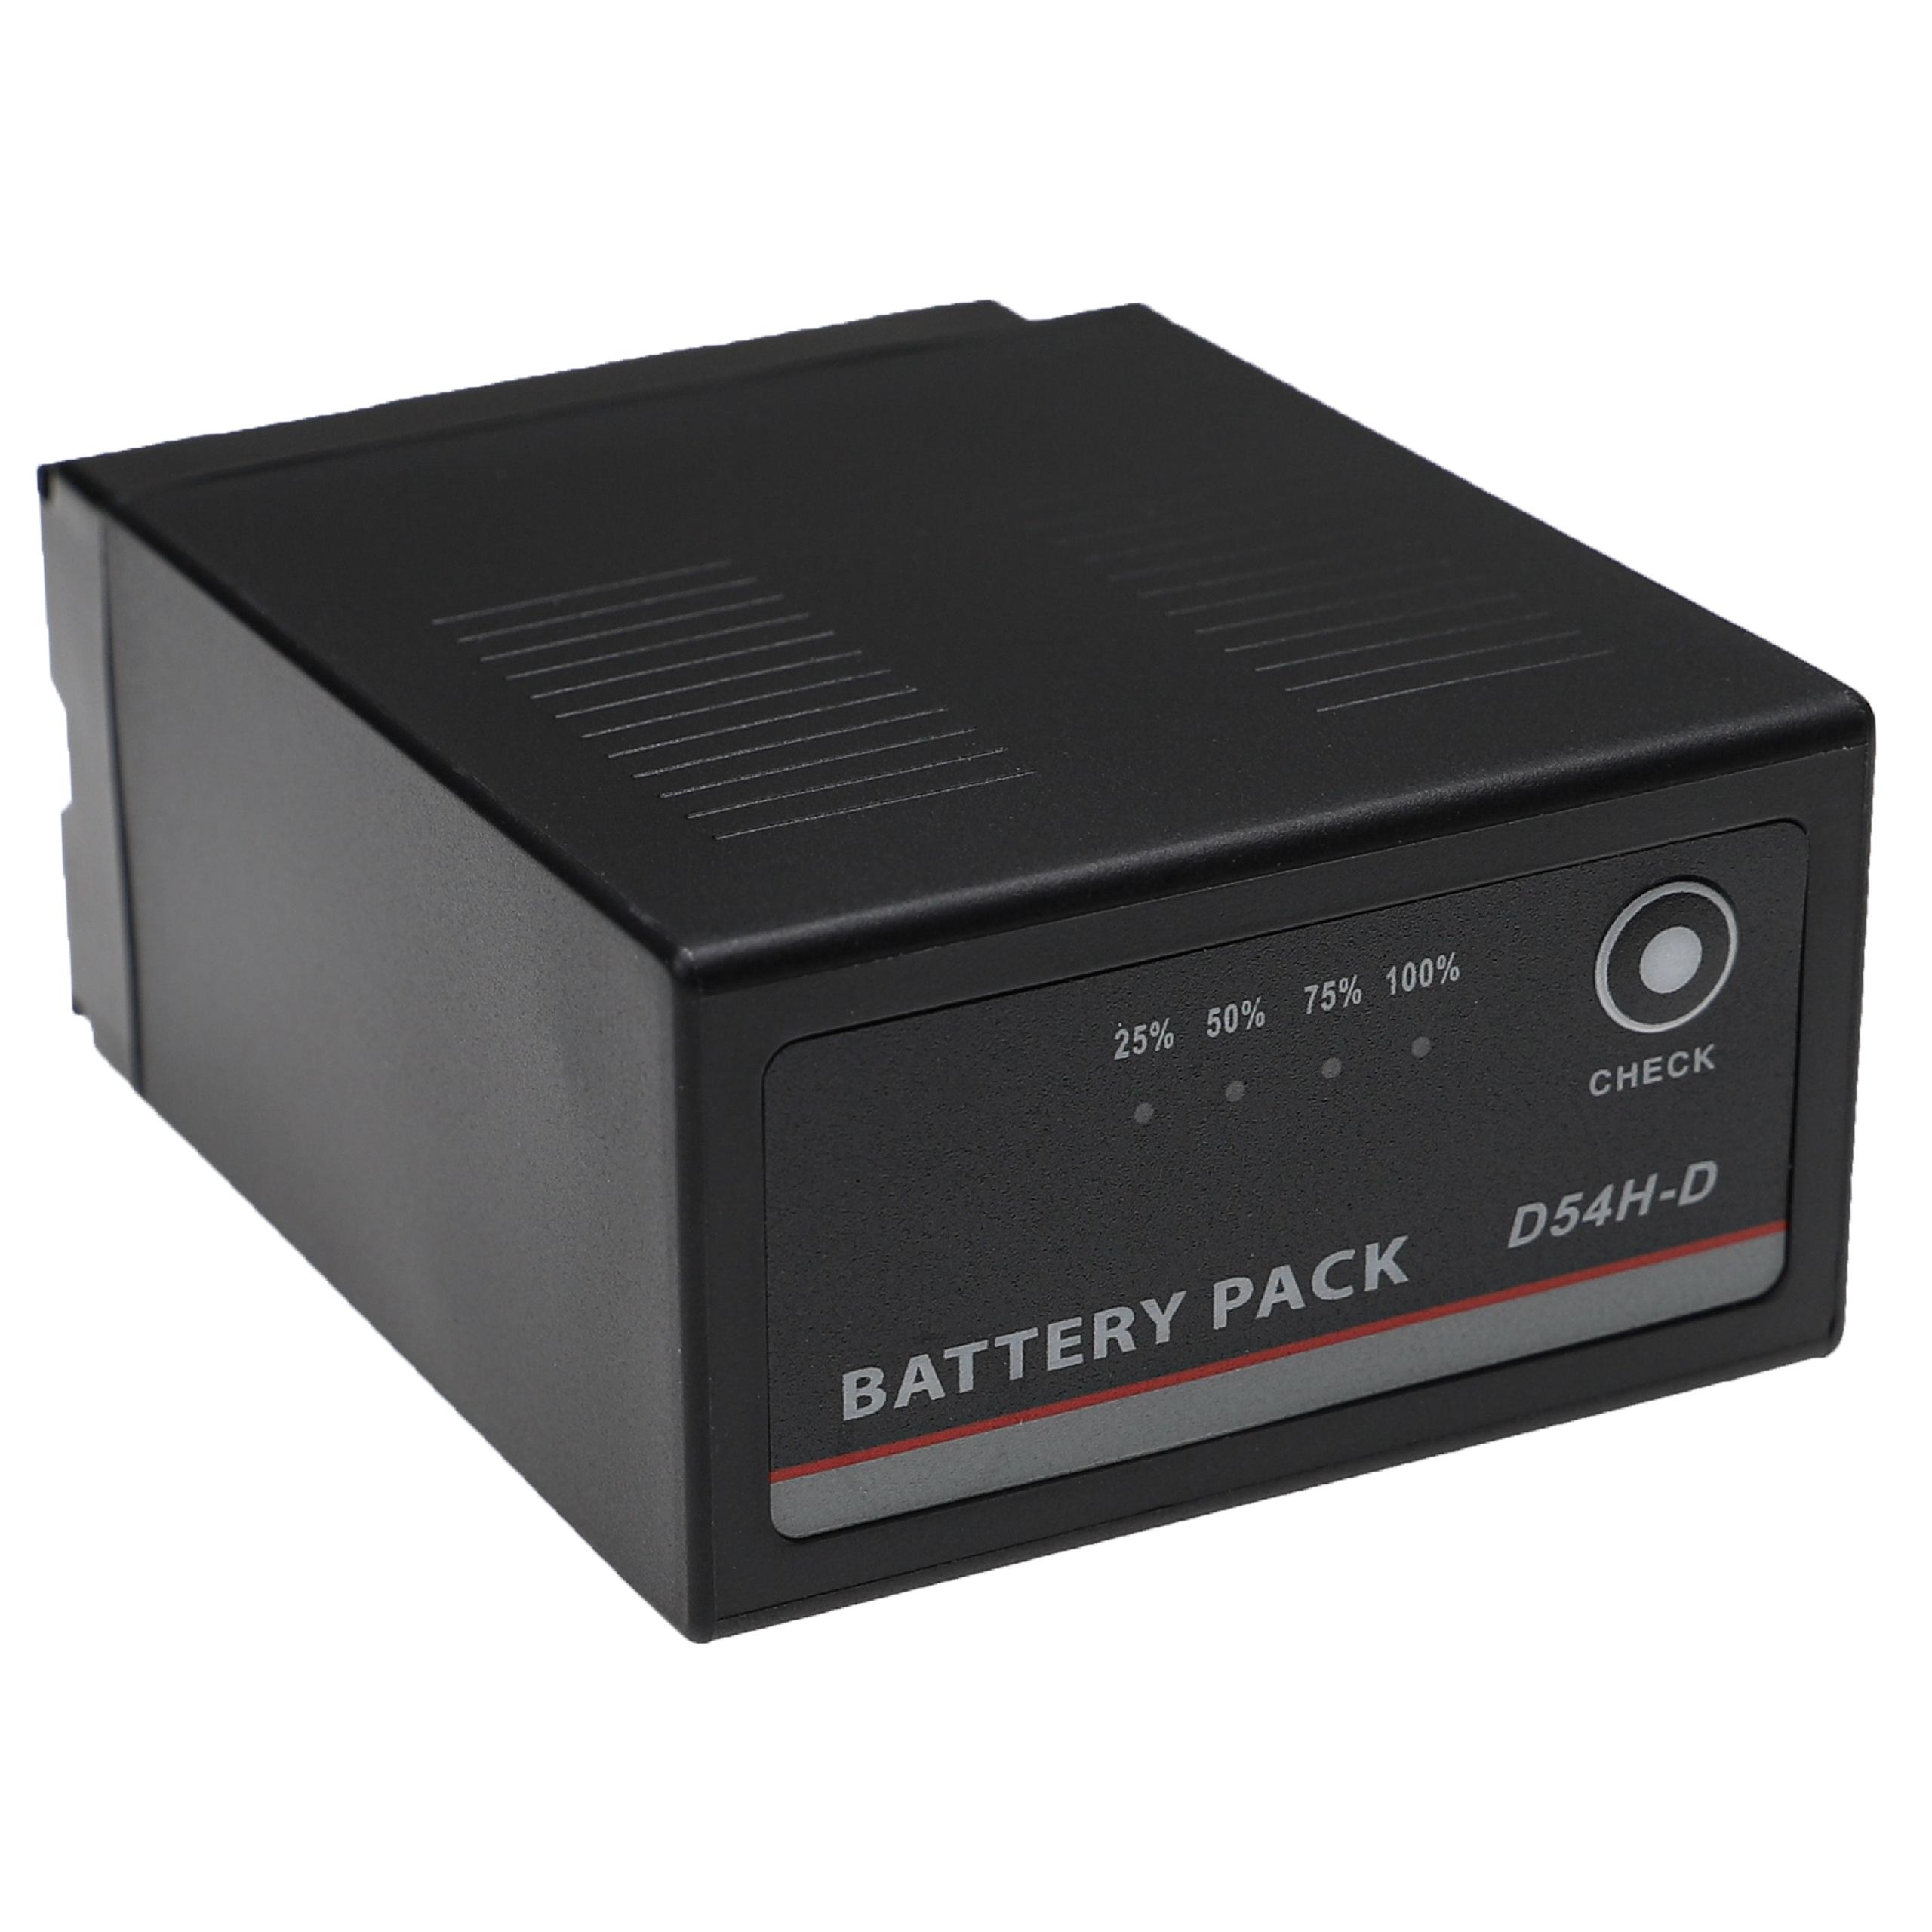 Akumulator do kamery cyfrowej / wideo zamiennik Hitachi DZ-BP28, DZ-BP16 - 7800 mAh 7,4 V Li-Ion